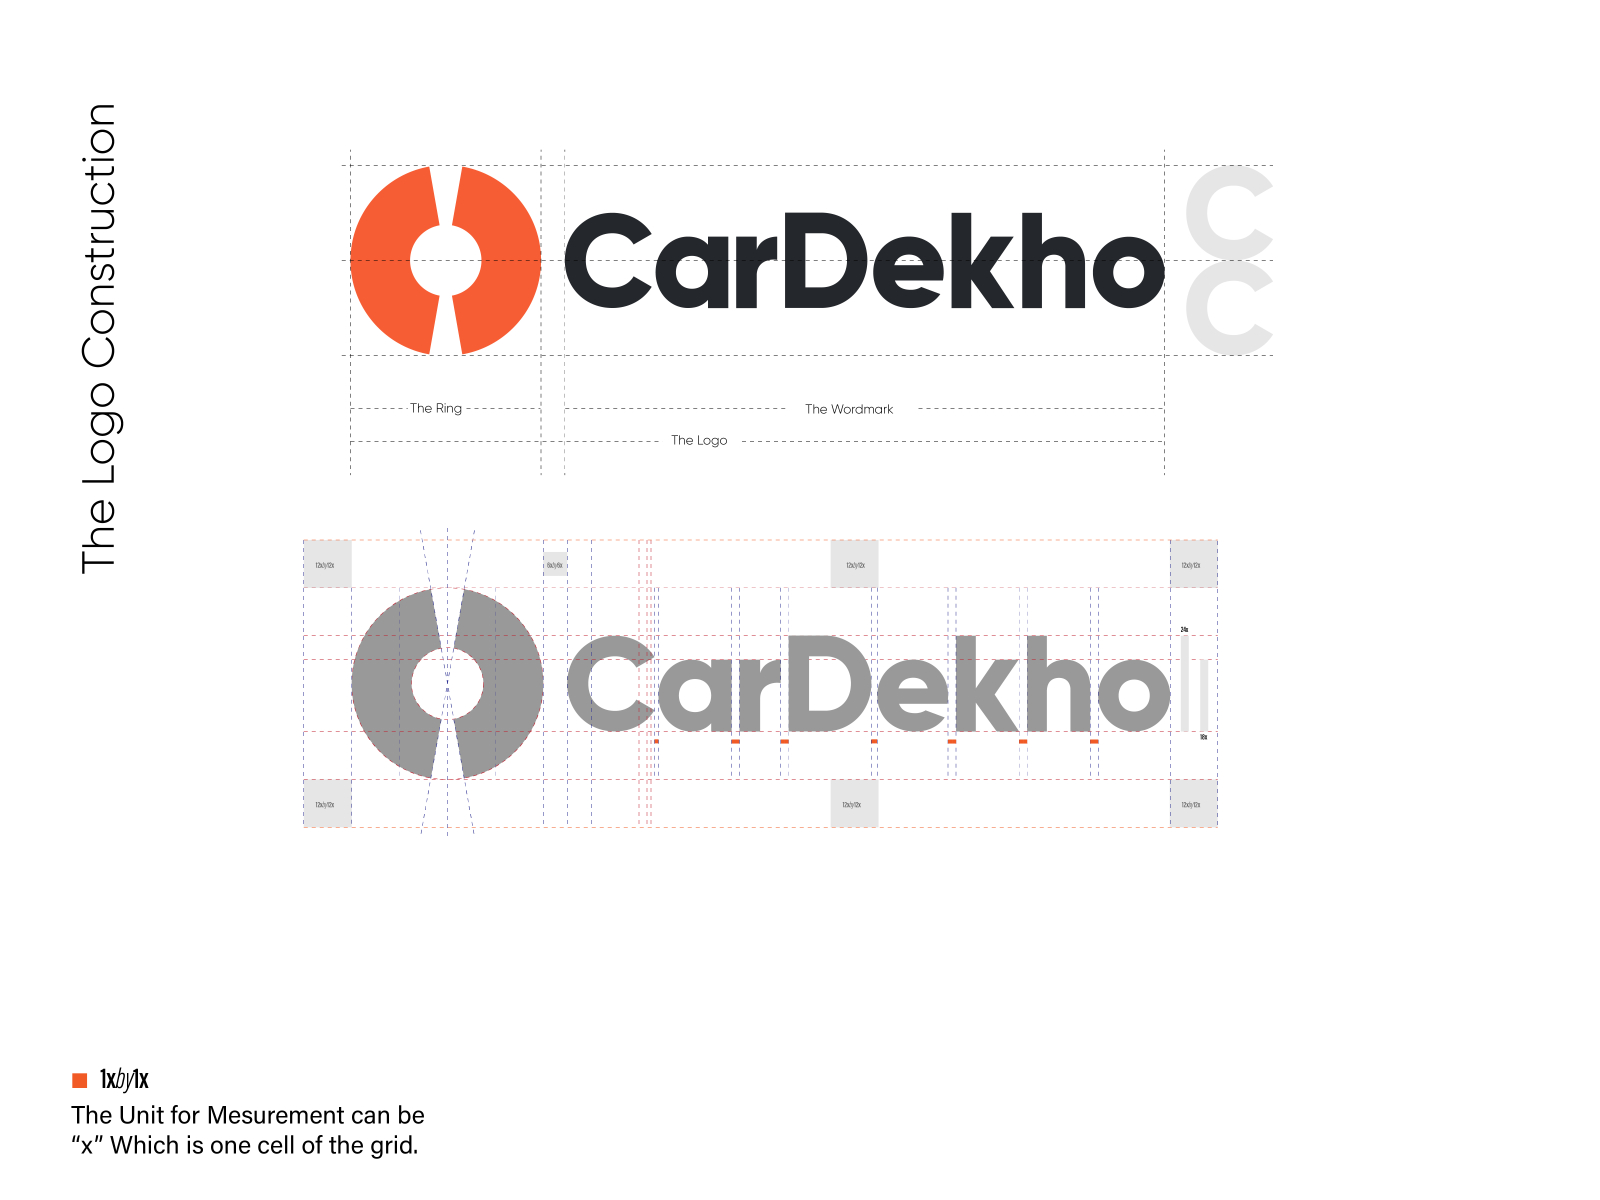 Mayank Jain - CEO, New Auto Business at CarDekho | The Org